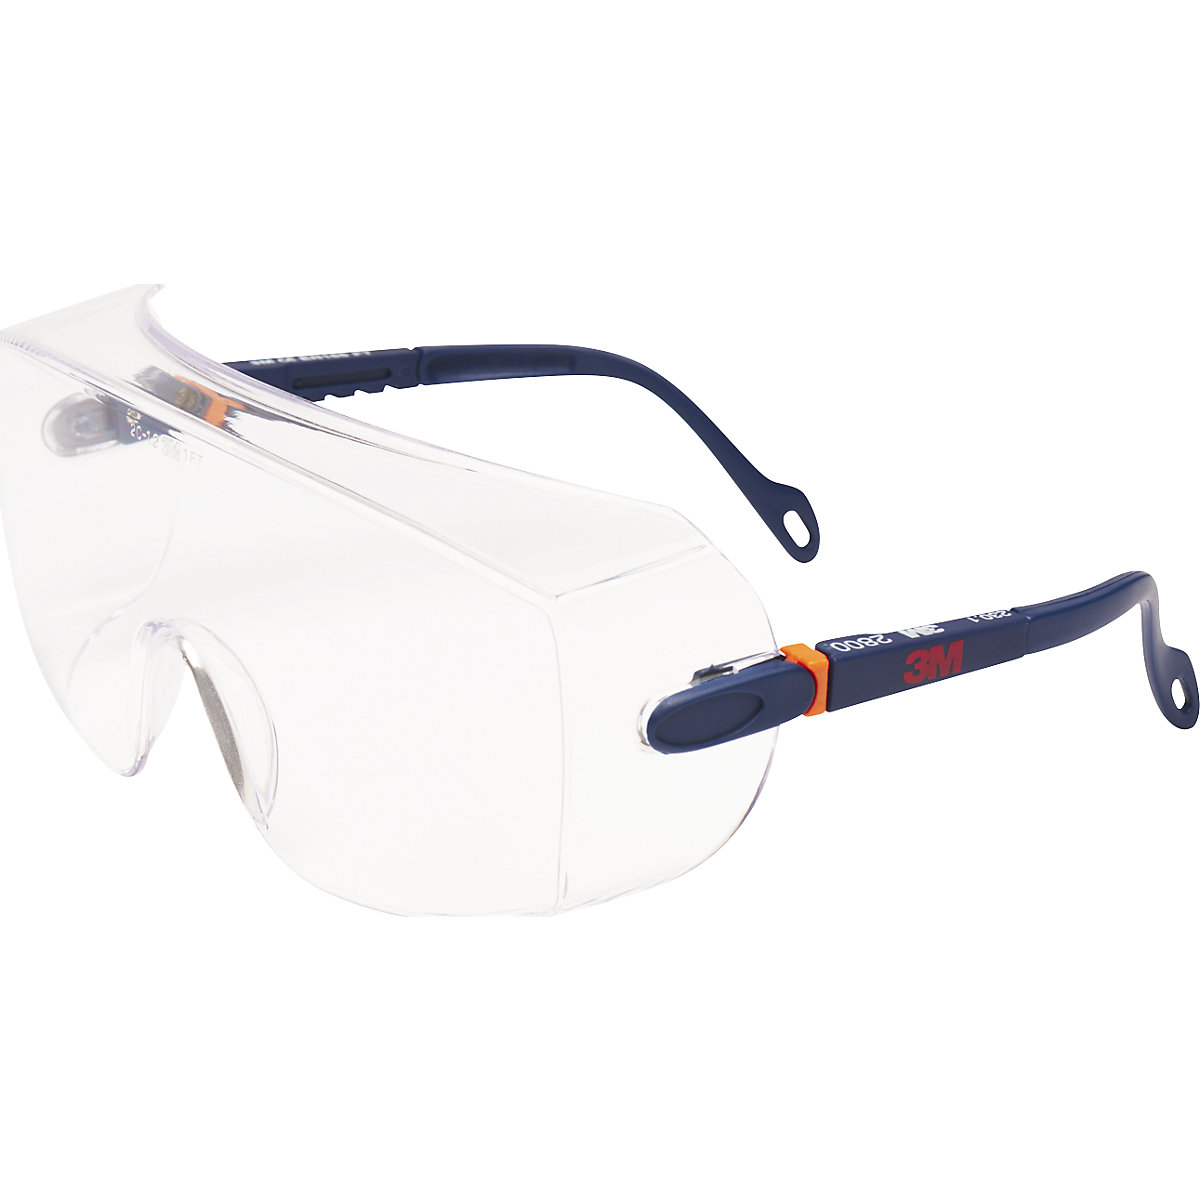 Okulary ochronne nakładane na okulary korekcyjne 2800 – 3M